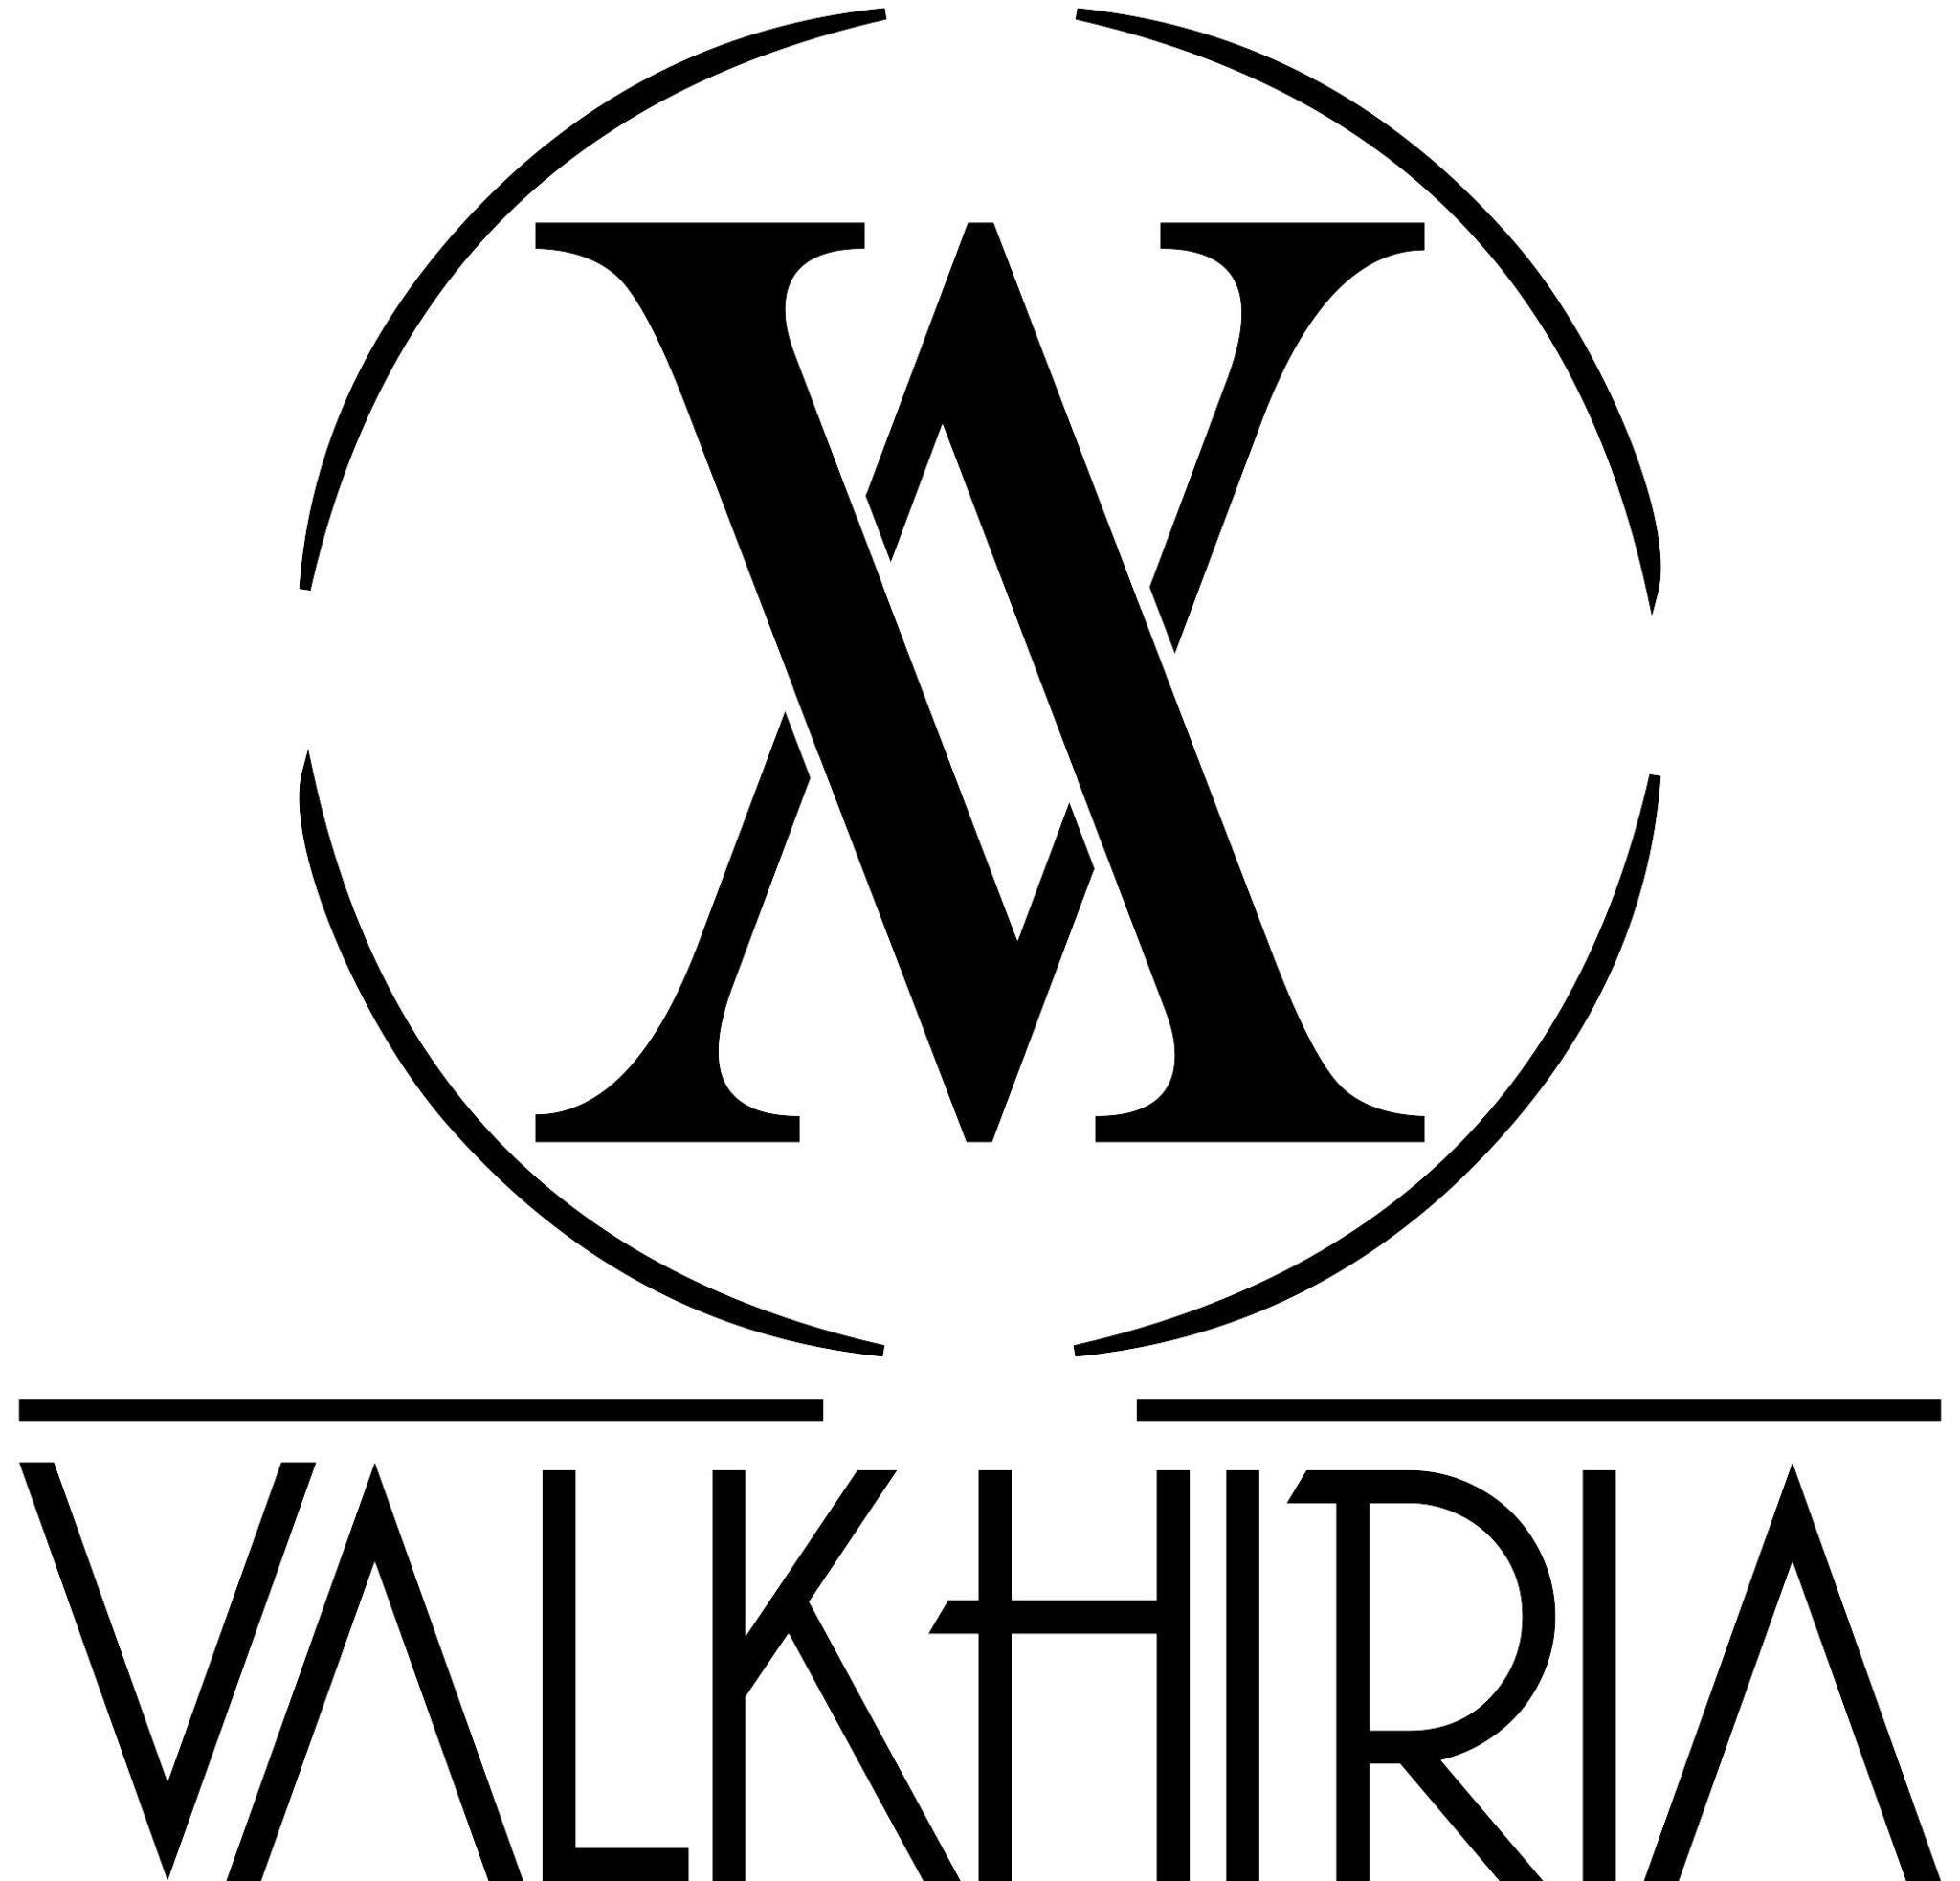 Valkhiria